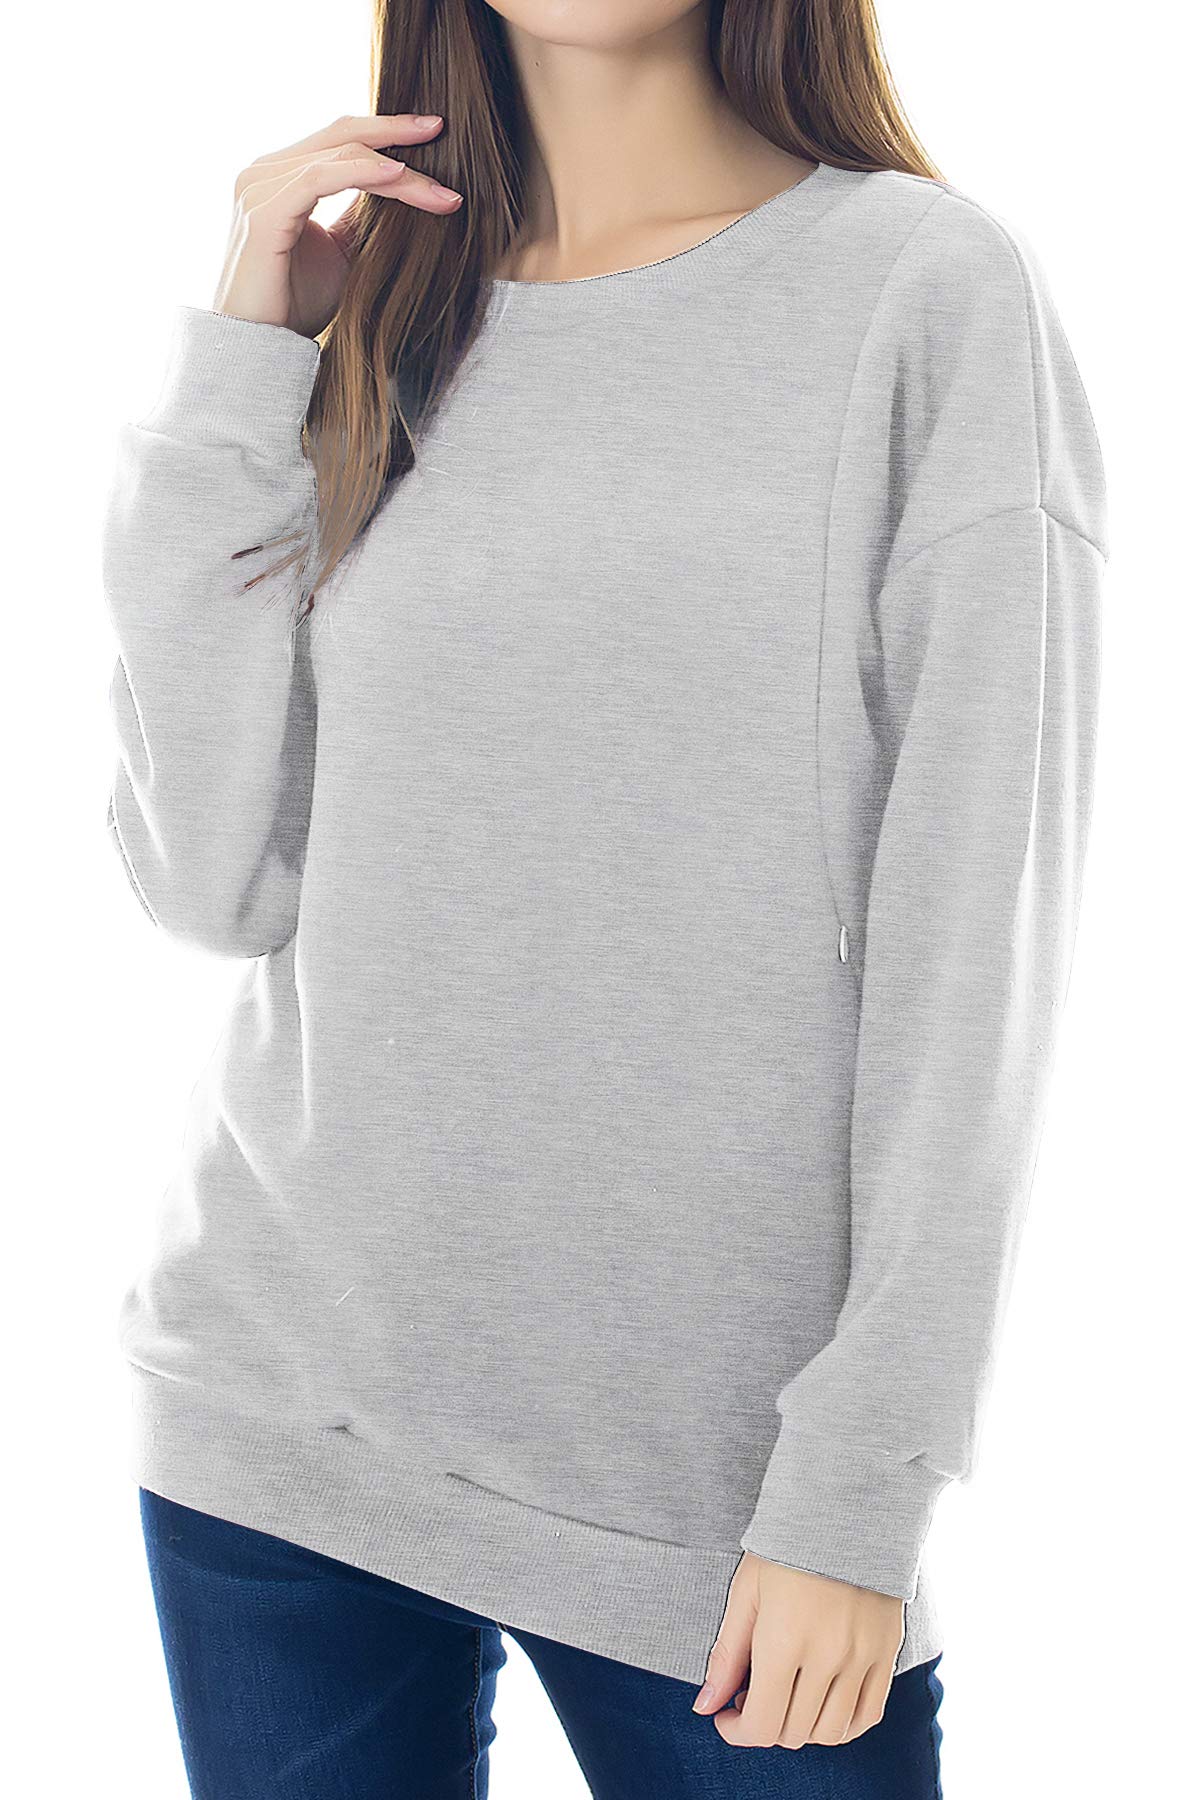 Smallshow Pflege Sweatshirt Langarm T-Shirt Bluse Stillen Pullover Tops Stillshirt Light Grey S